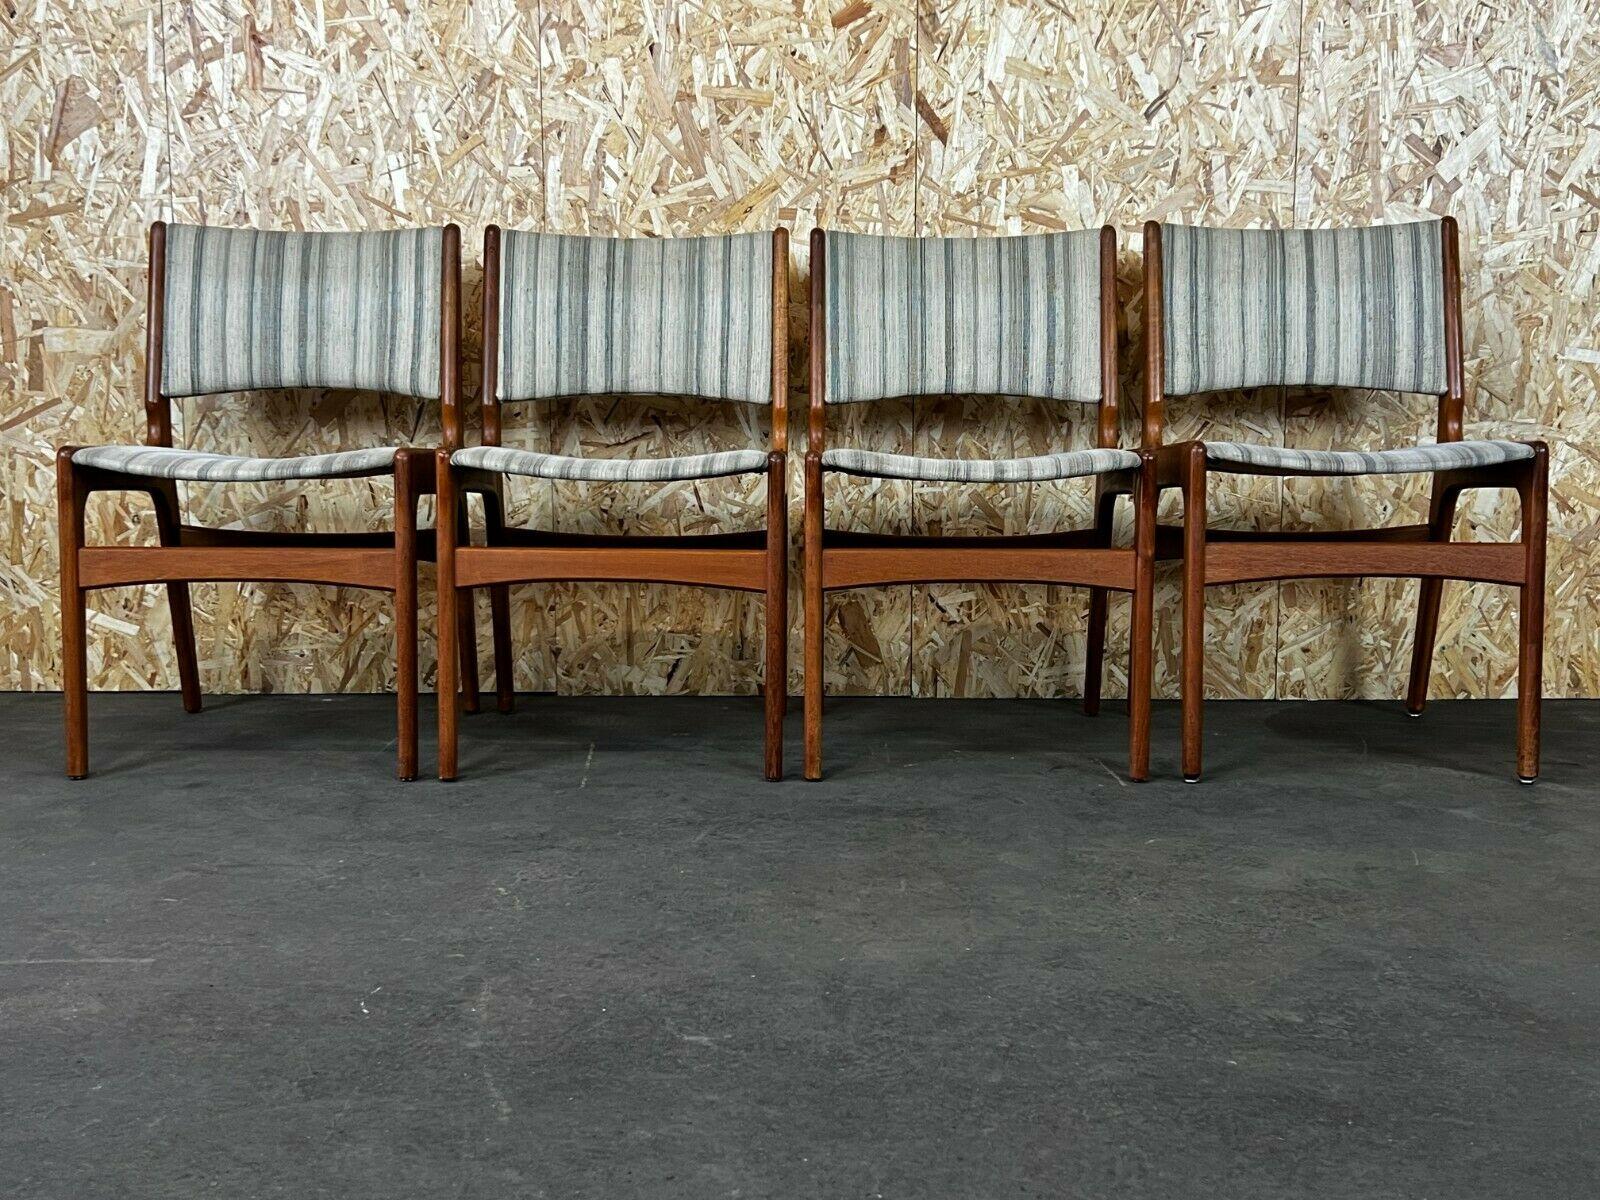 4x 60s 70s teak chairs chair dining chair Henning Kjaernulf Danish 60s

Object: 4x chair

Manufacturer: Henning Kjaernulf

Condition: good - vintage

Age: around 1960-1970

Dimensions:

48.5cm x 52cm x 81cm
Seat height = 45cm

Other